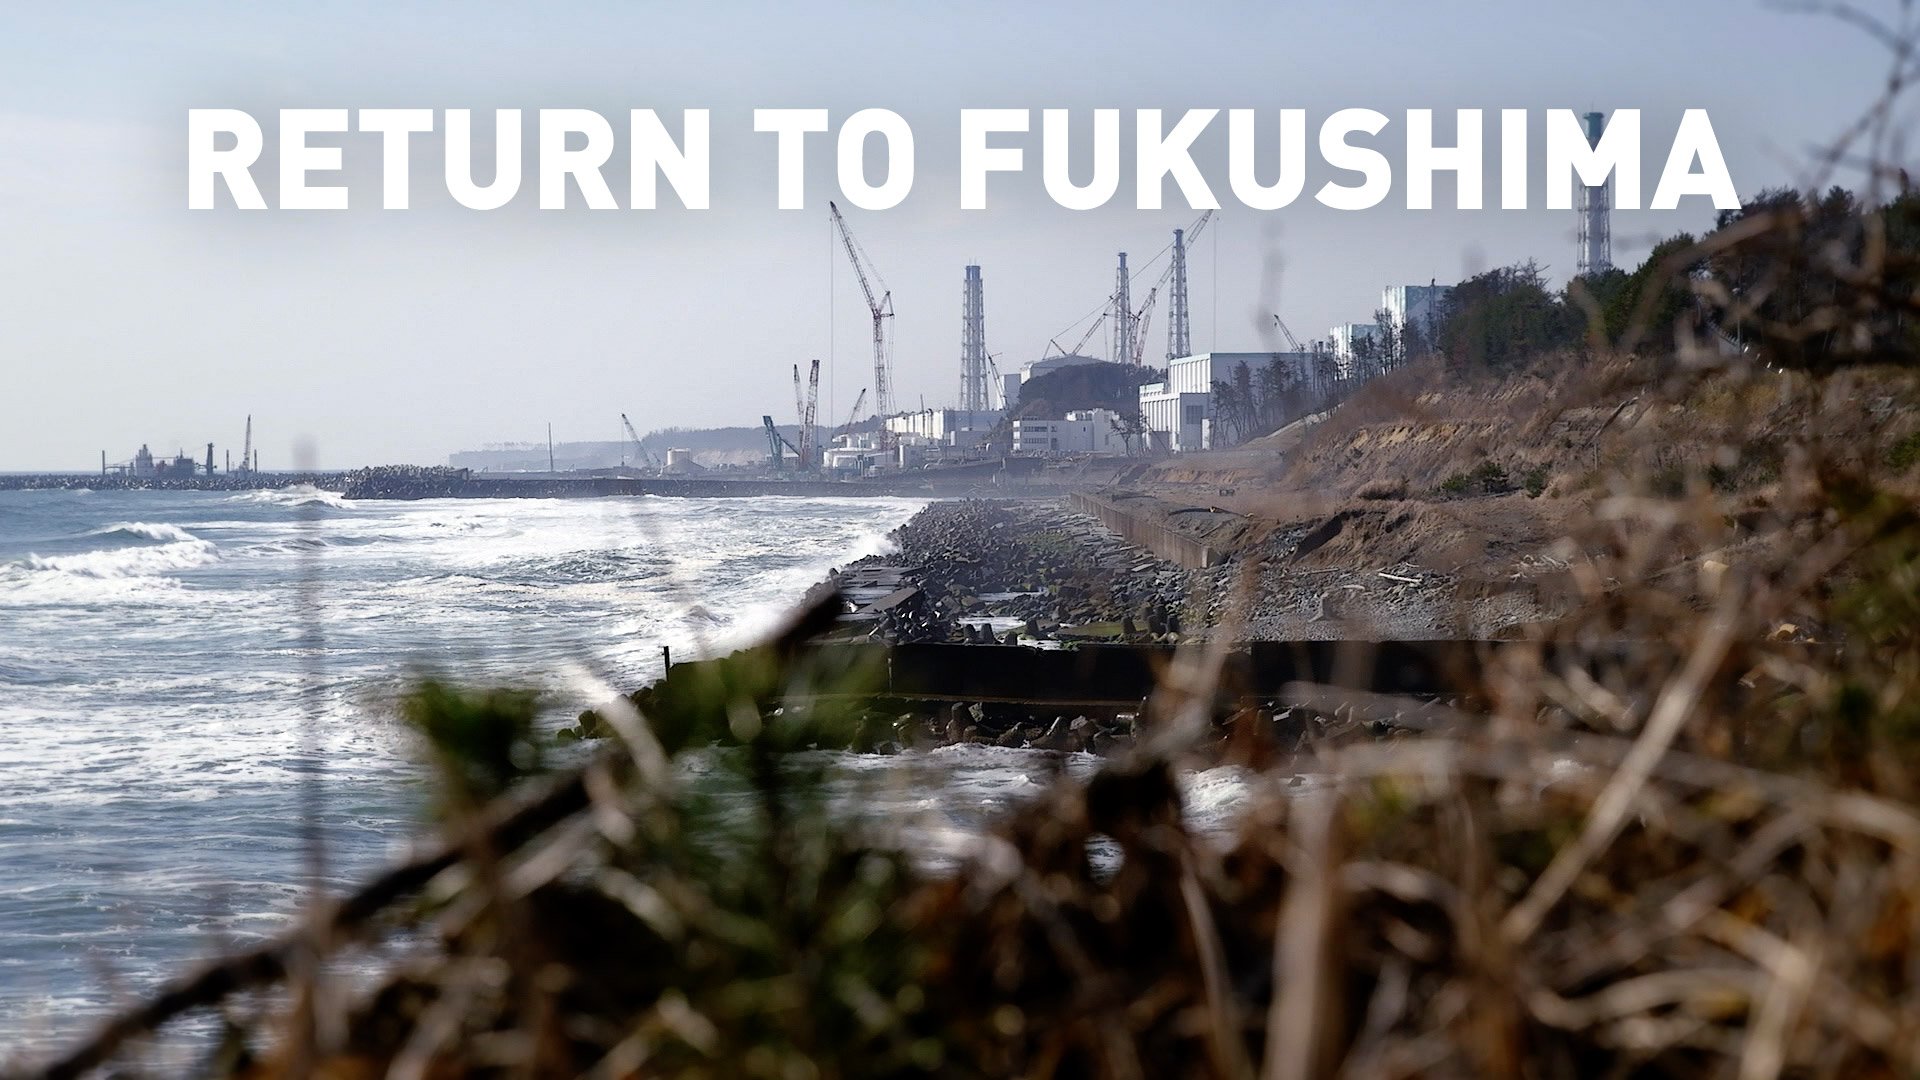 RETURN TO FUKUSHIMA